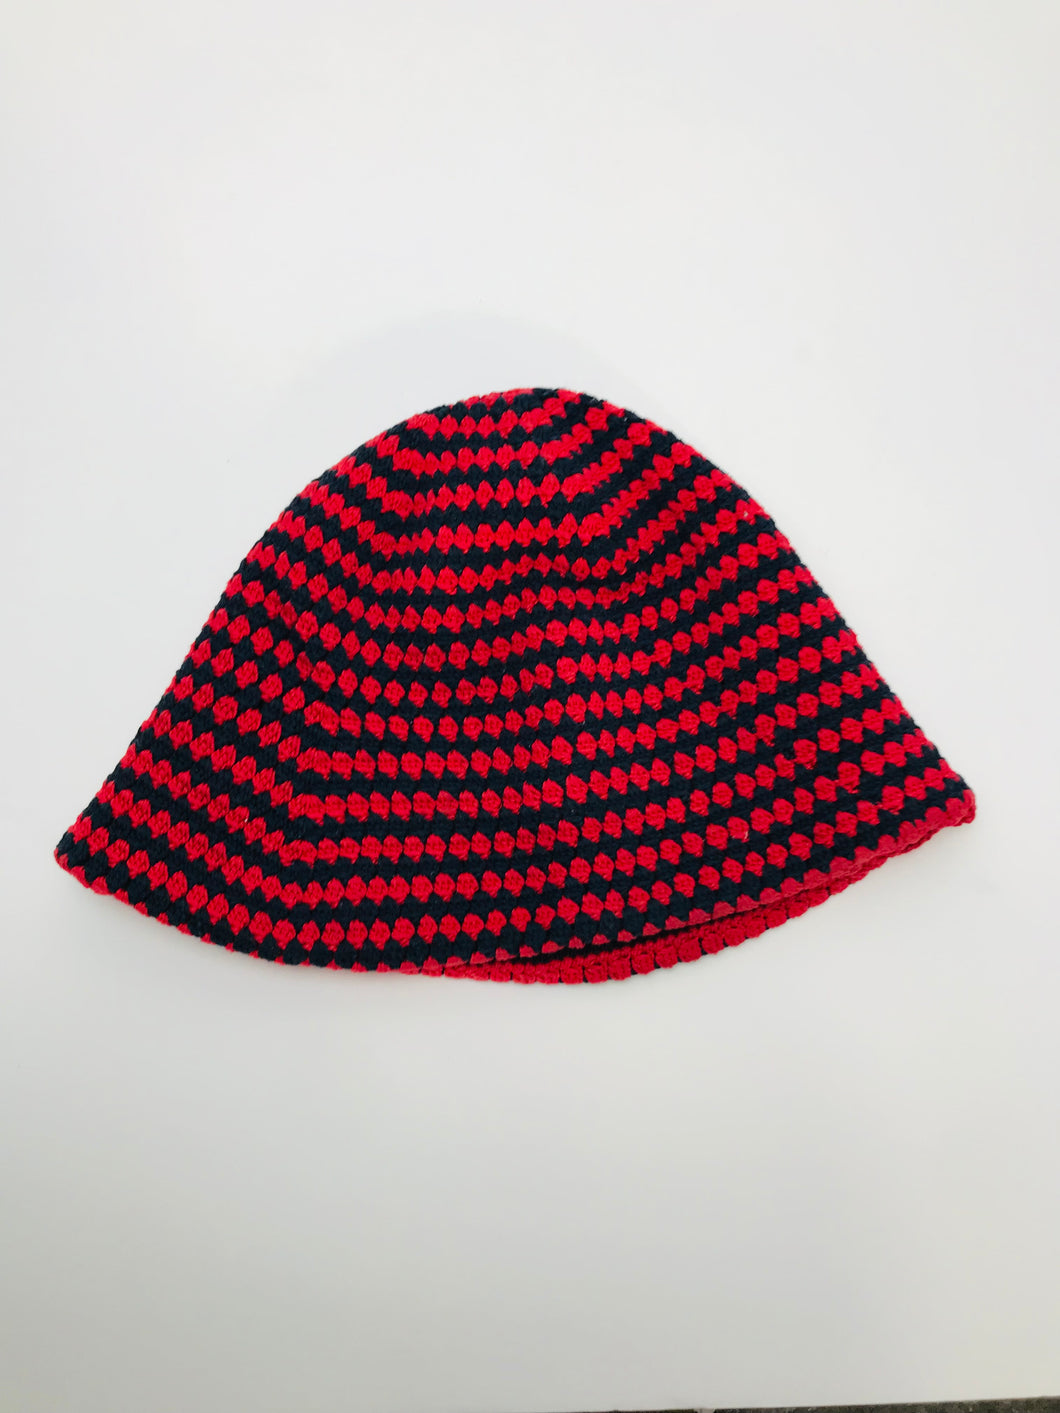 Prada Women's Patterned Knit Hat Beanie | M | Red